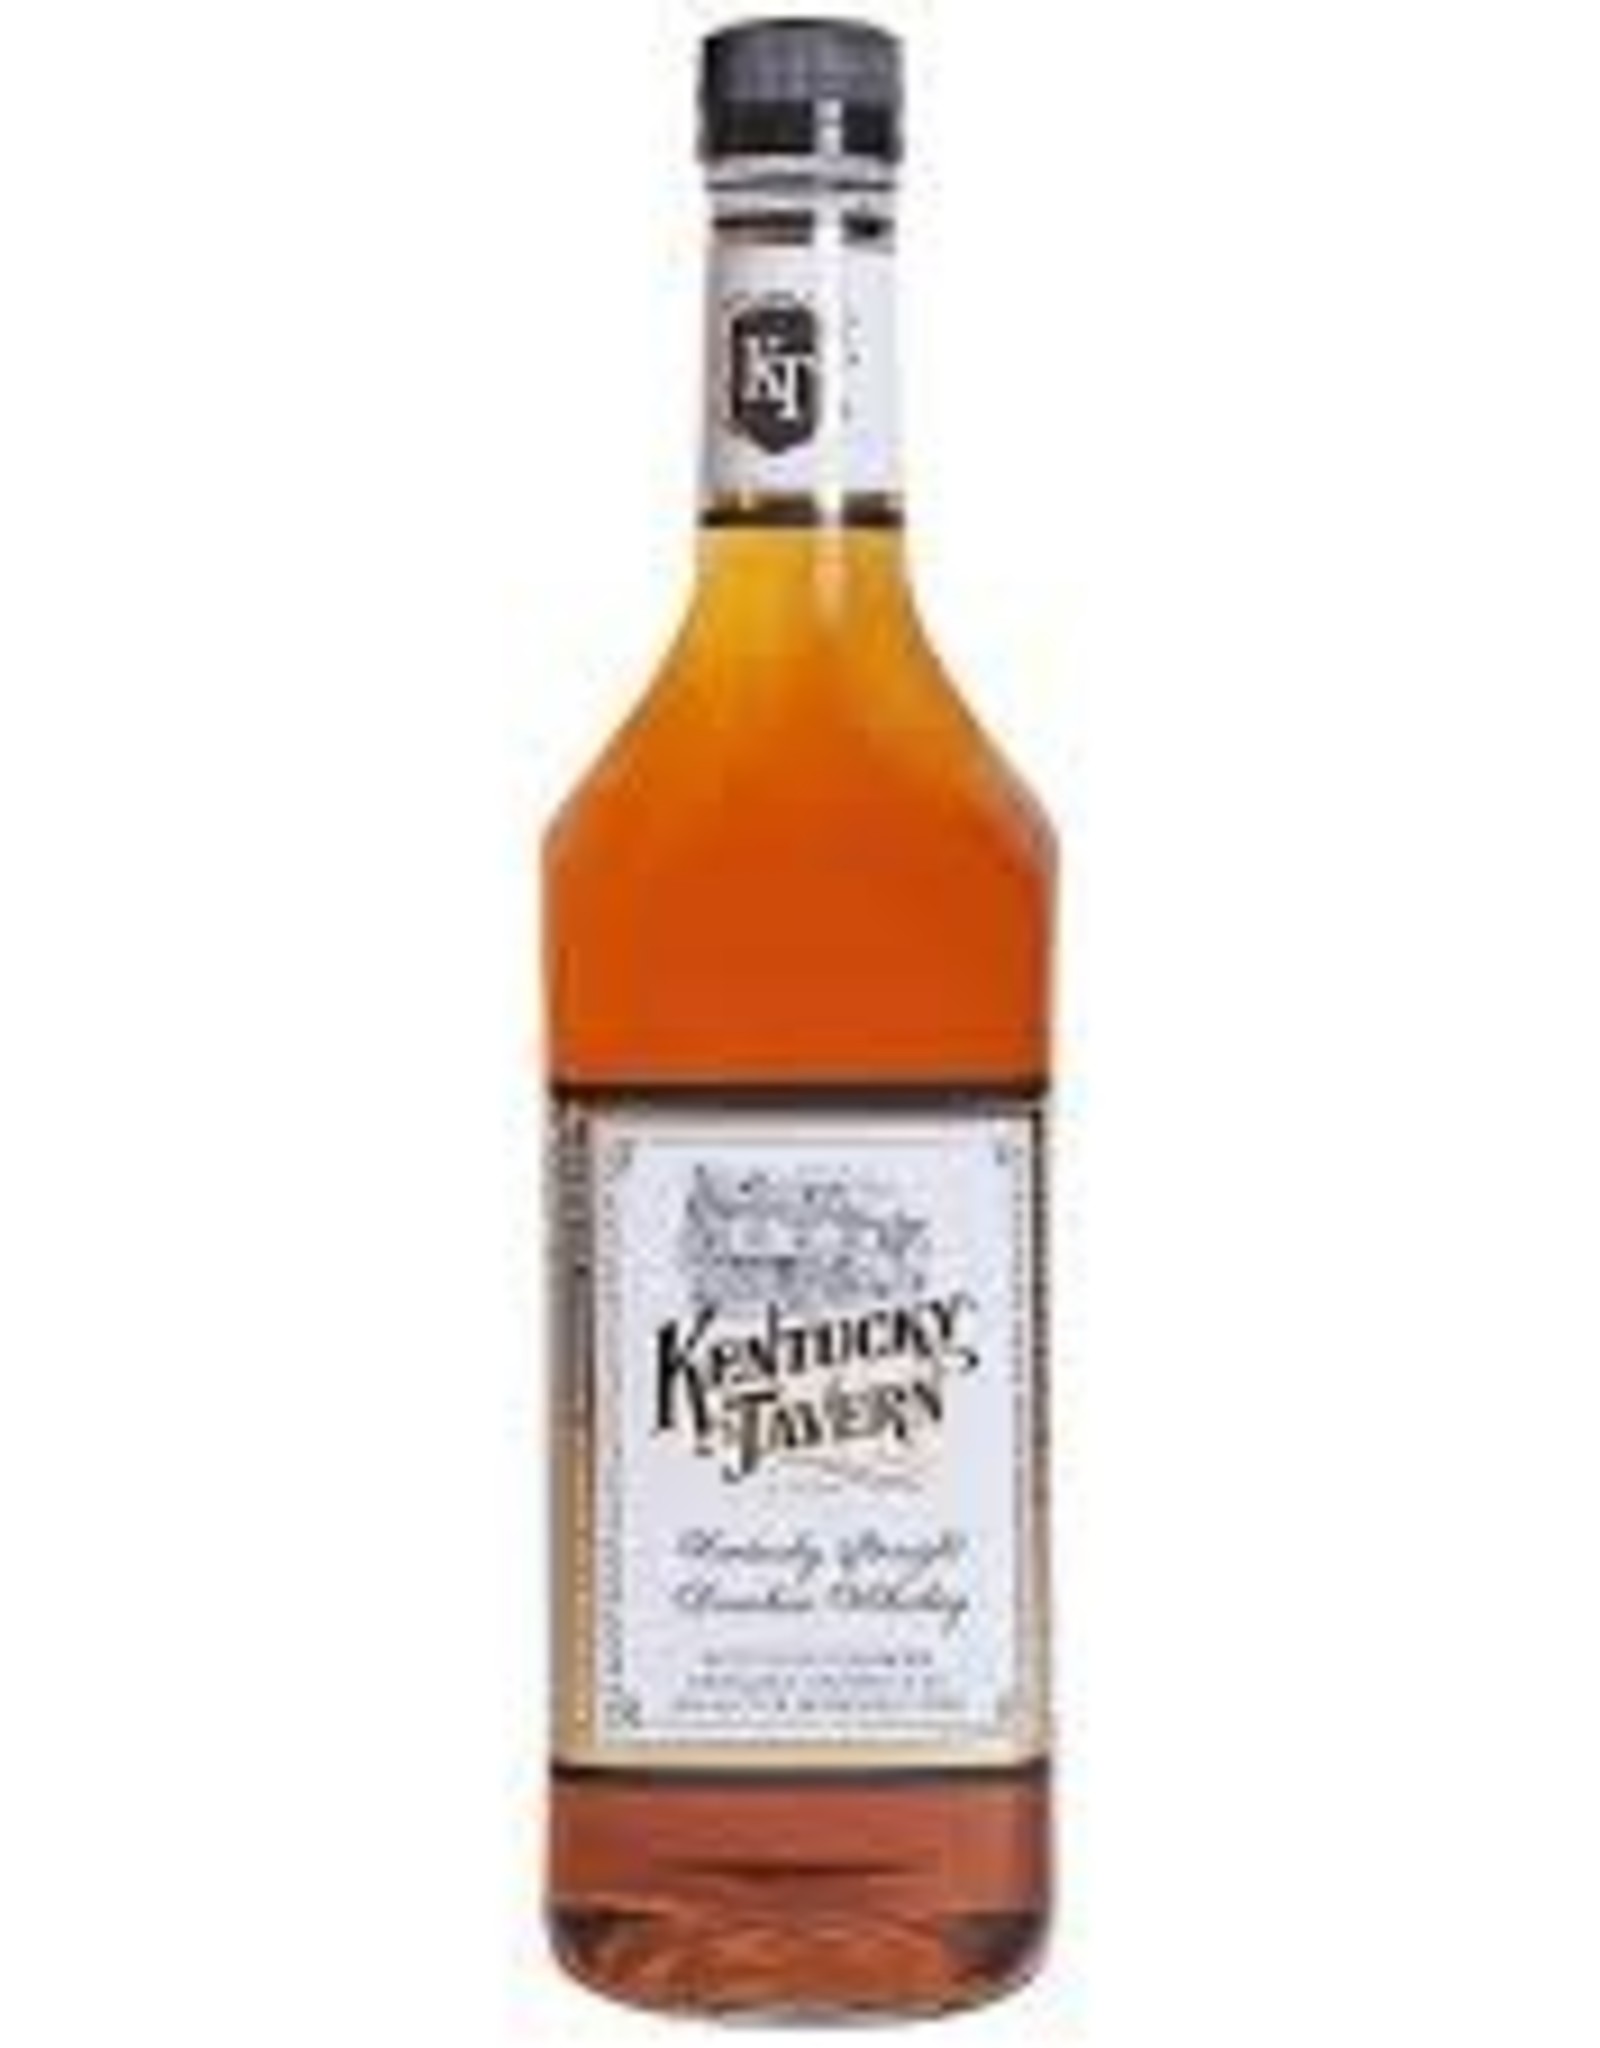 Kentucky Tavern Bourbon Whiskey